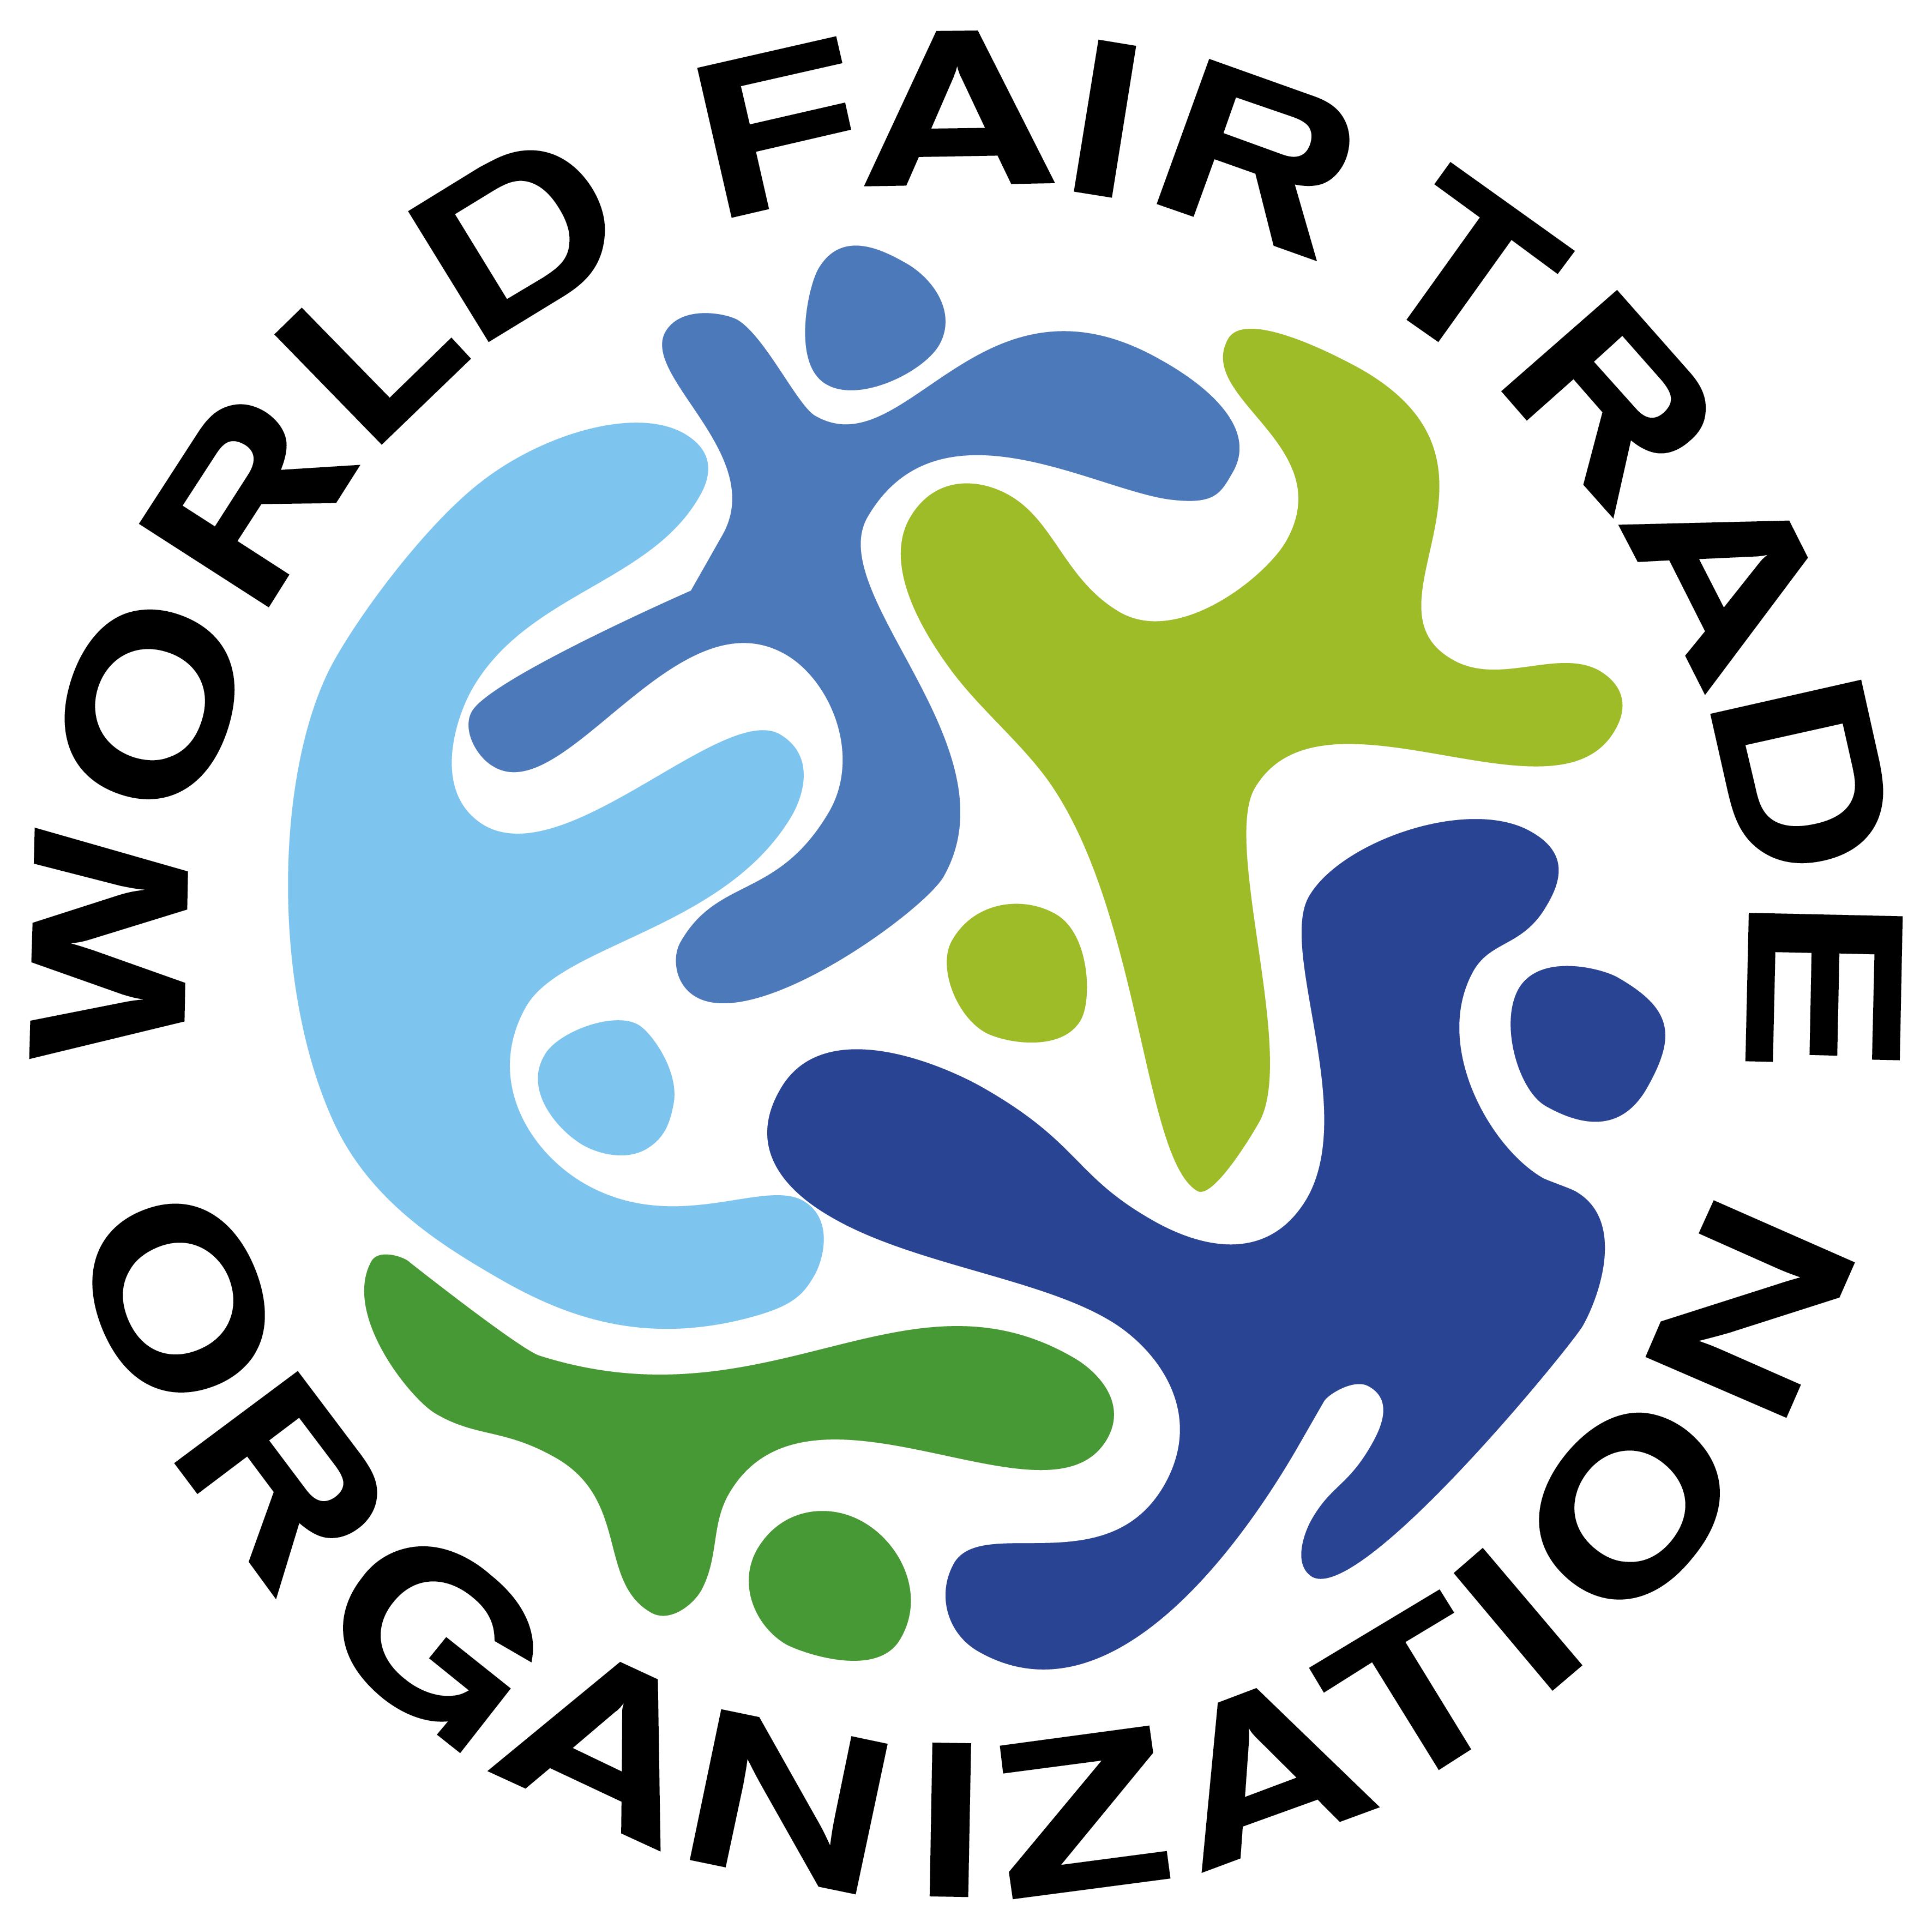 World fair trade